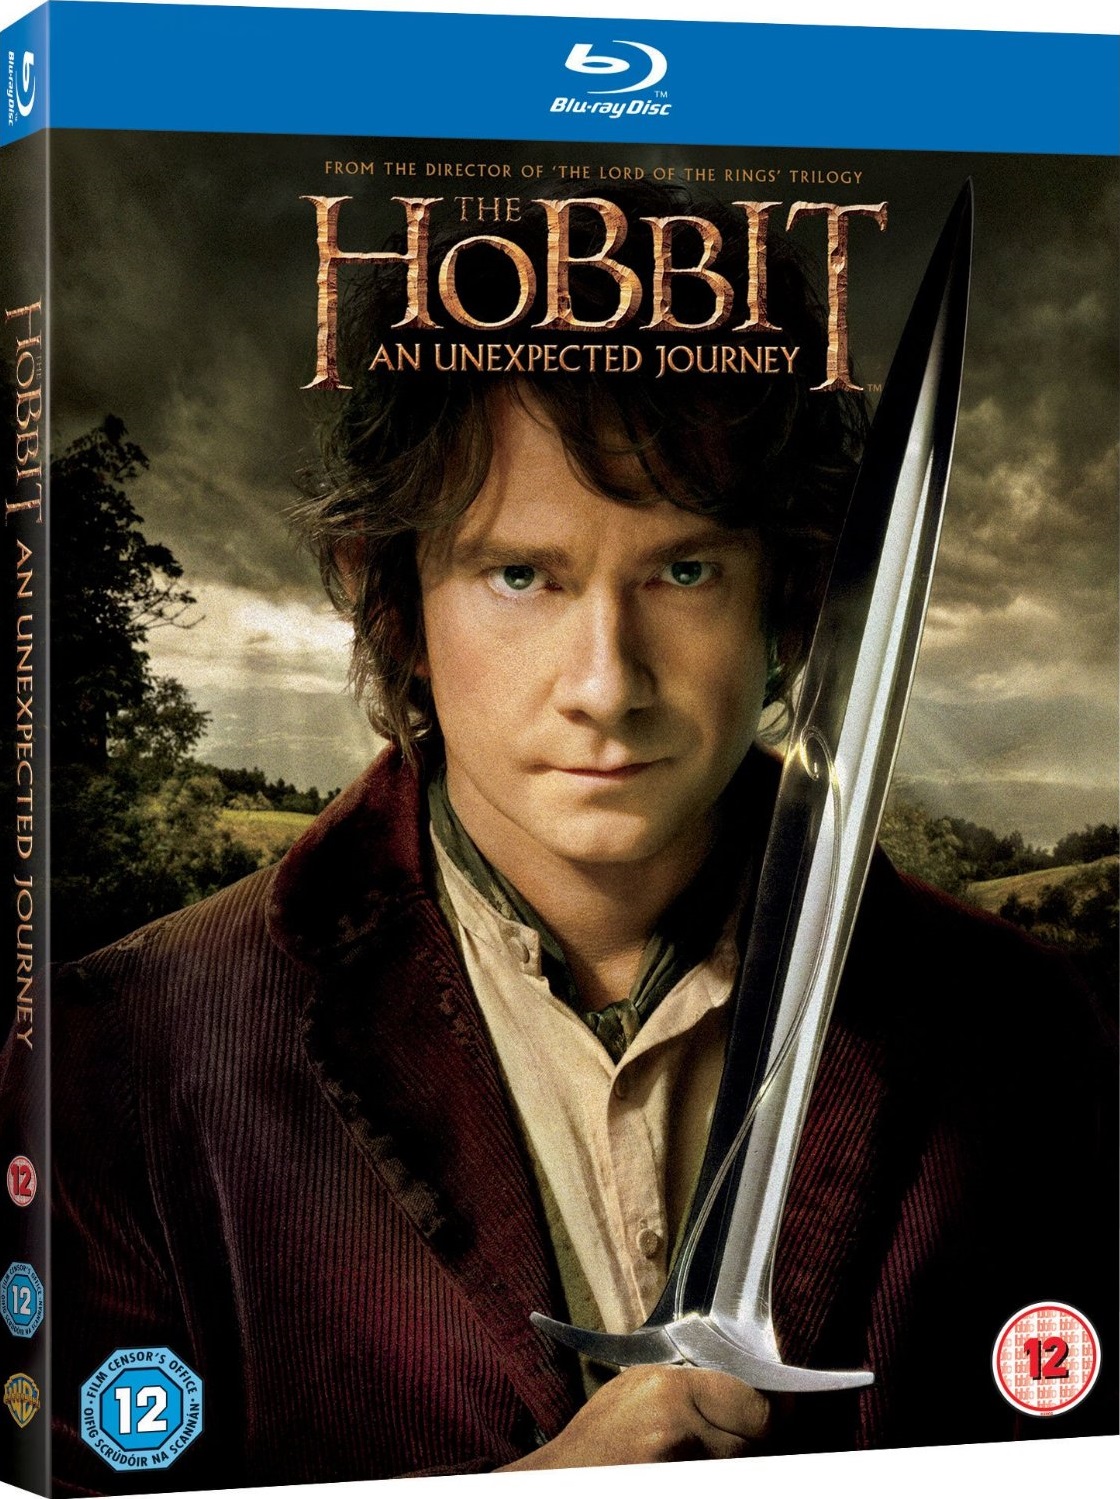 [霍比特人1].The.Hobbit.An.Unexpected.Journey.2012.EXTENDED.BluRay.1080p.AVC.DTS-HD.MA.7.1-Tay    39.17G+ ]9 o/ X5 e- o( Q; p& i2 p7 D" C-2.jpg